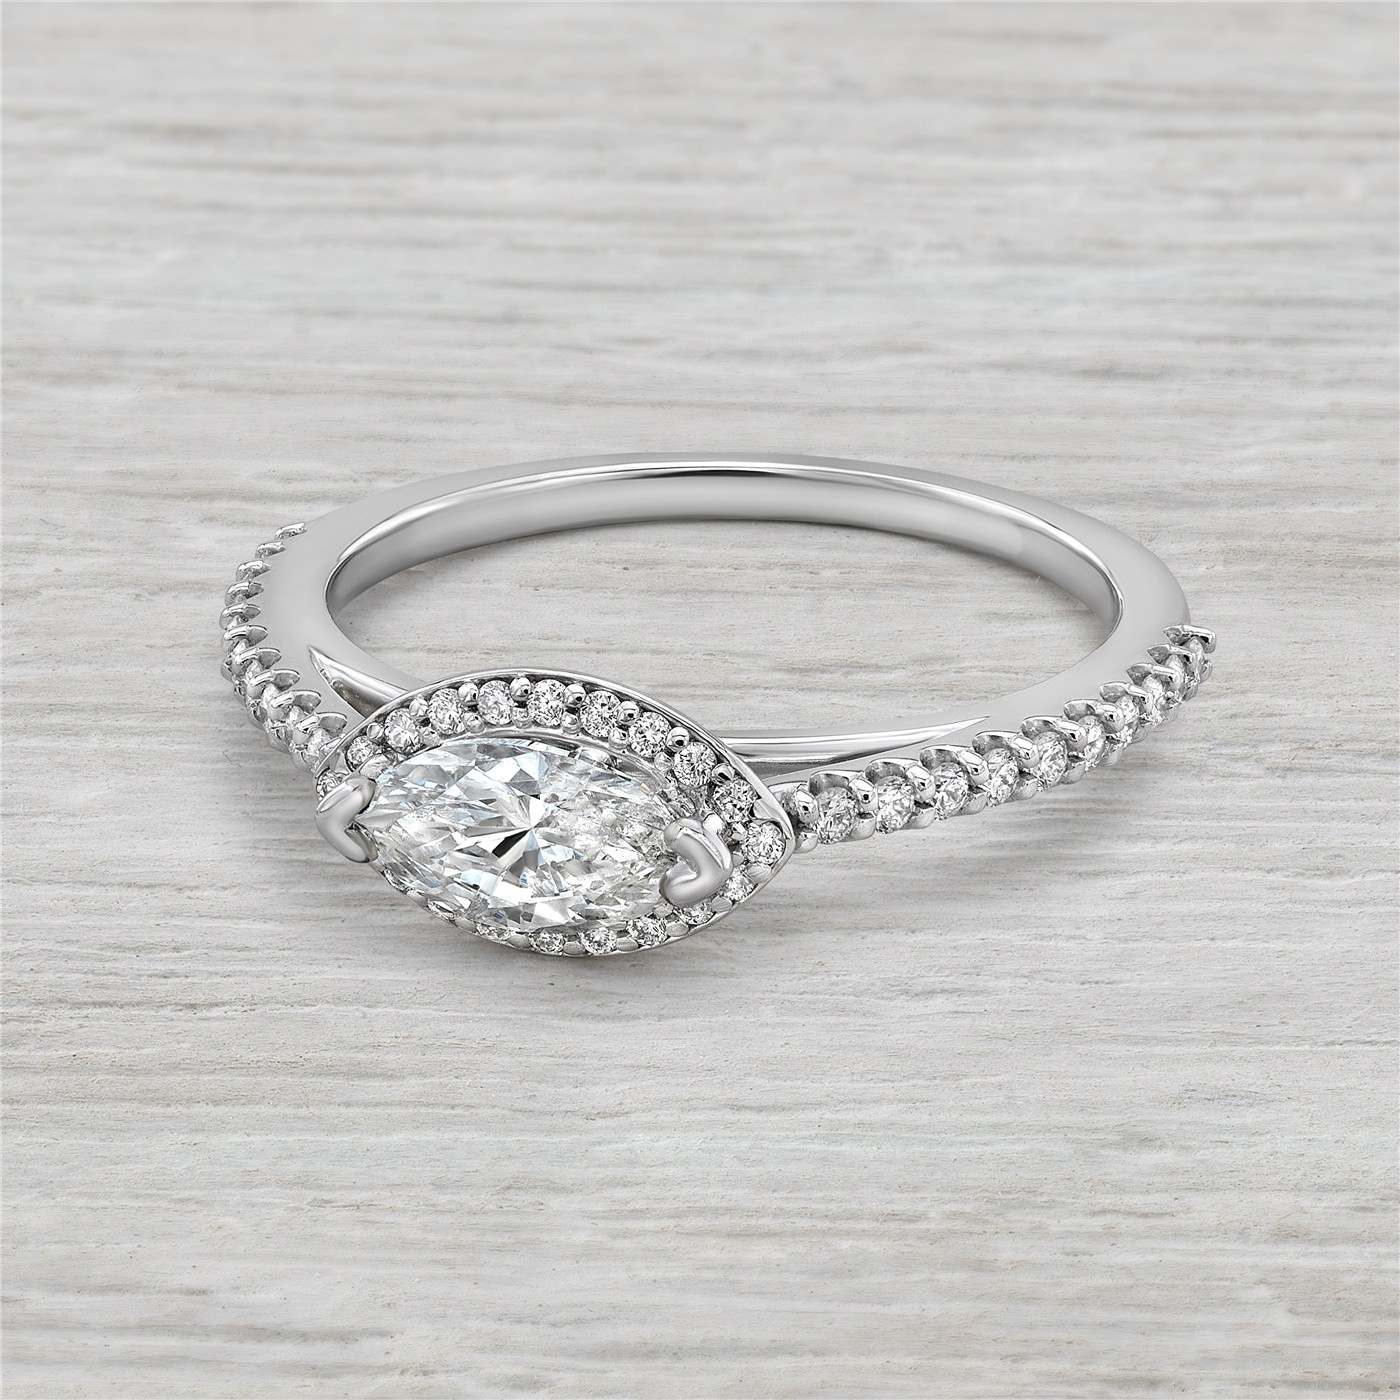 Marquise Diamond Engagement Ring
 14k White Gold and Marquise Diamond Engagement Ring